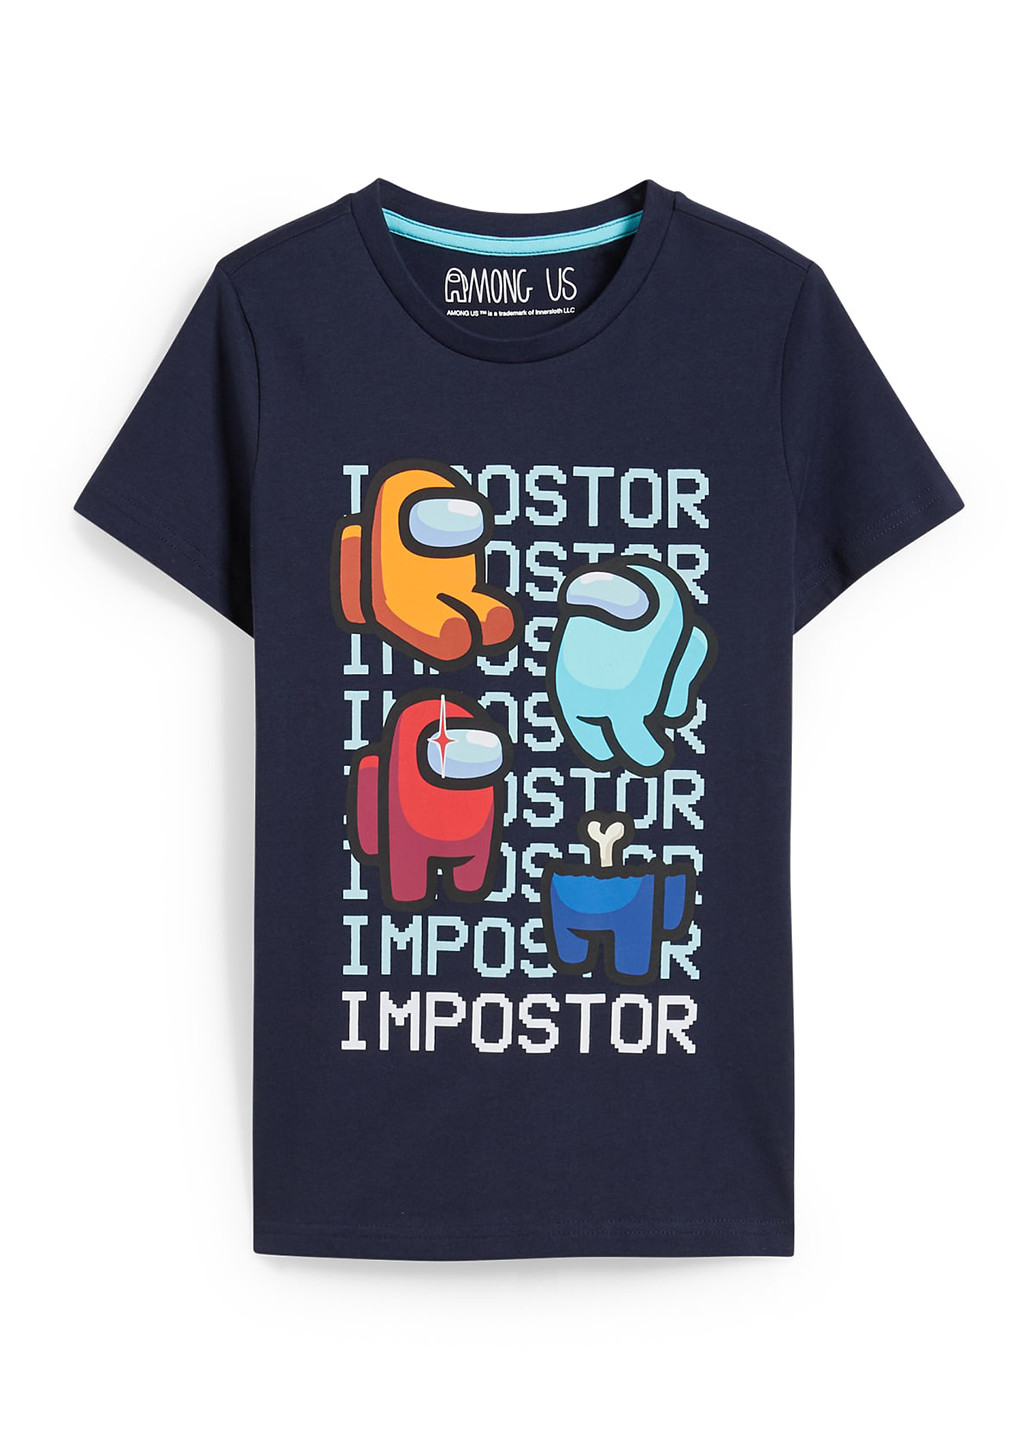 Темно-синий летний комплект (футболка, шорты) C&A